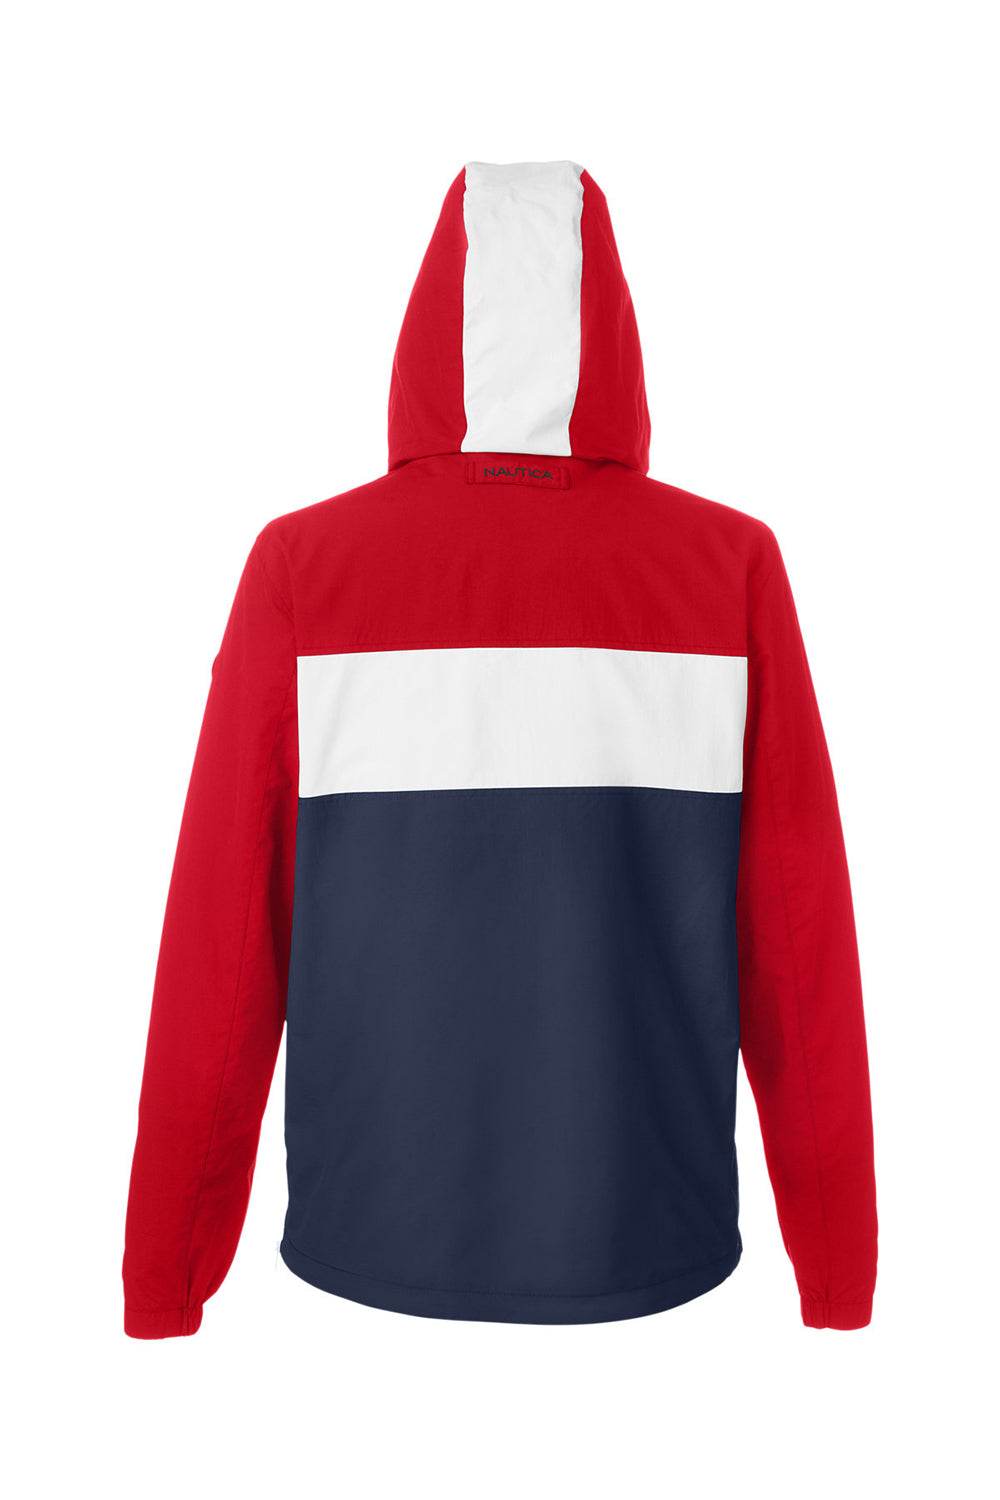 Nautica N17174 Mens Windward 1/4 Zip Hooded Jacket Red/Navy Blue/White Flat Back